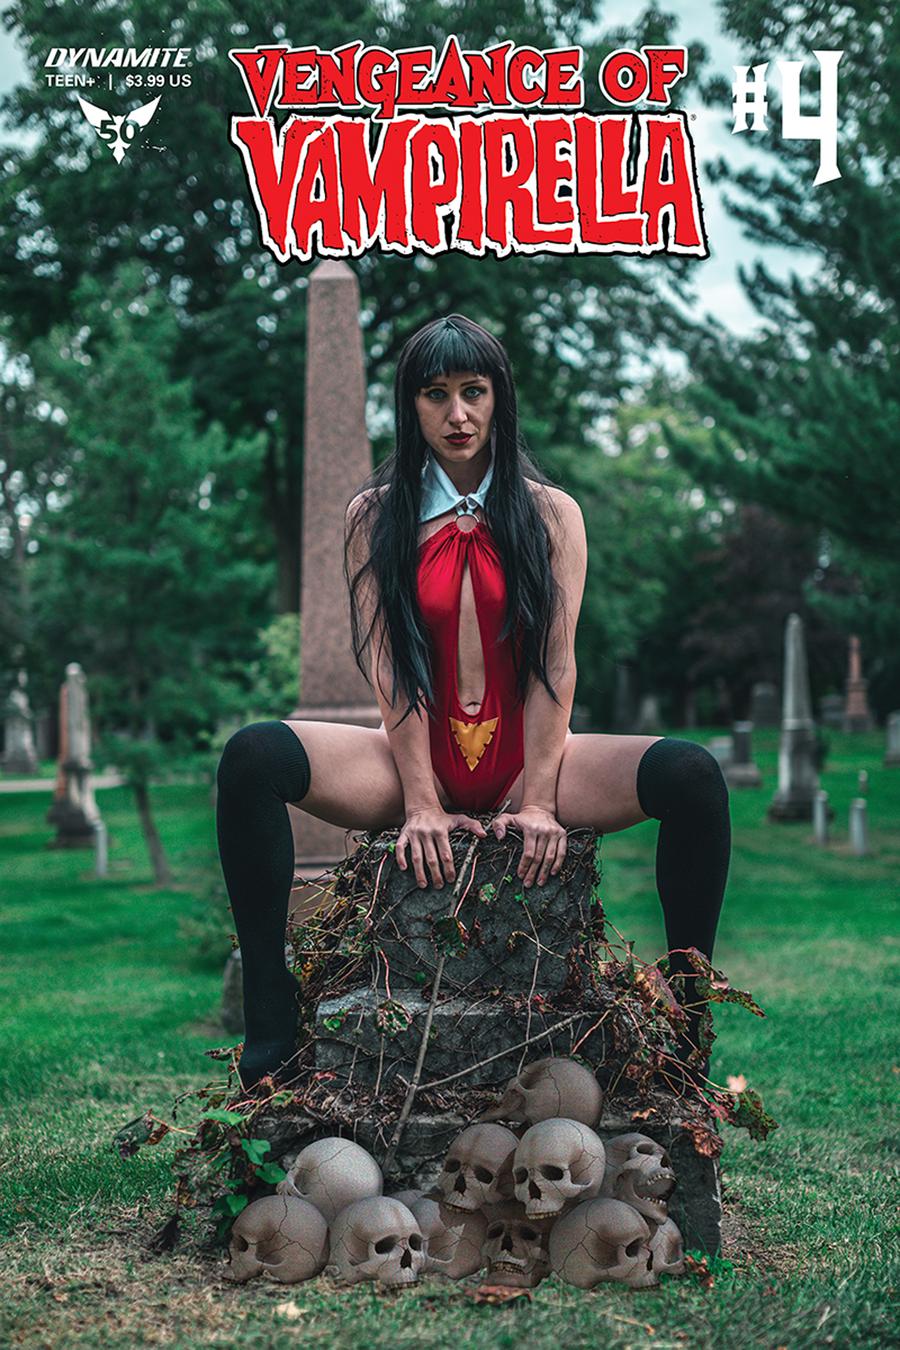 Vengeance Of Vampirella Vol 2 #4 Cover D Variant Ali Chappel Cosplay Photo Cover